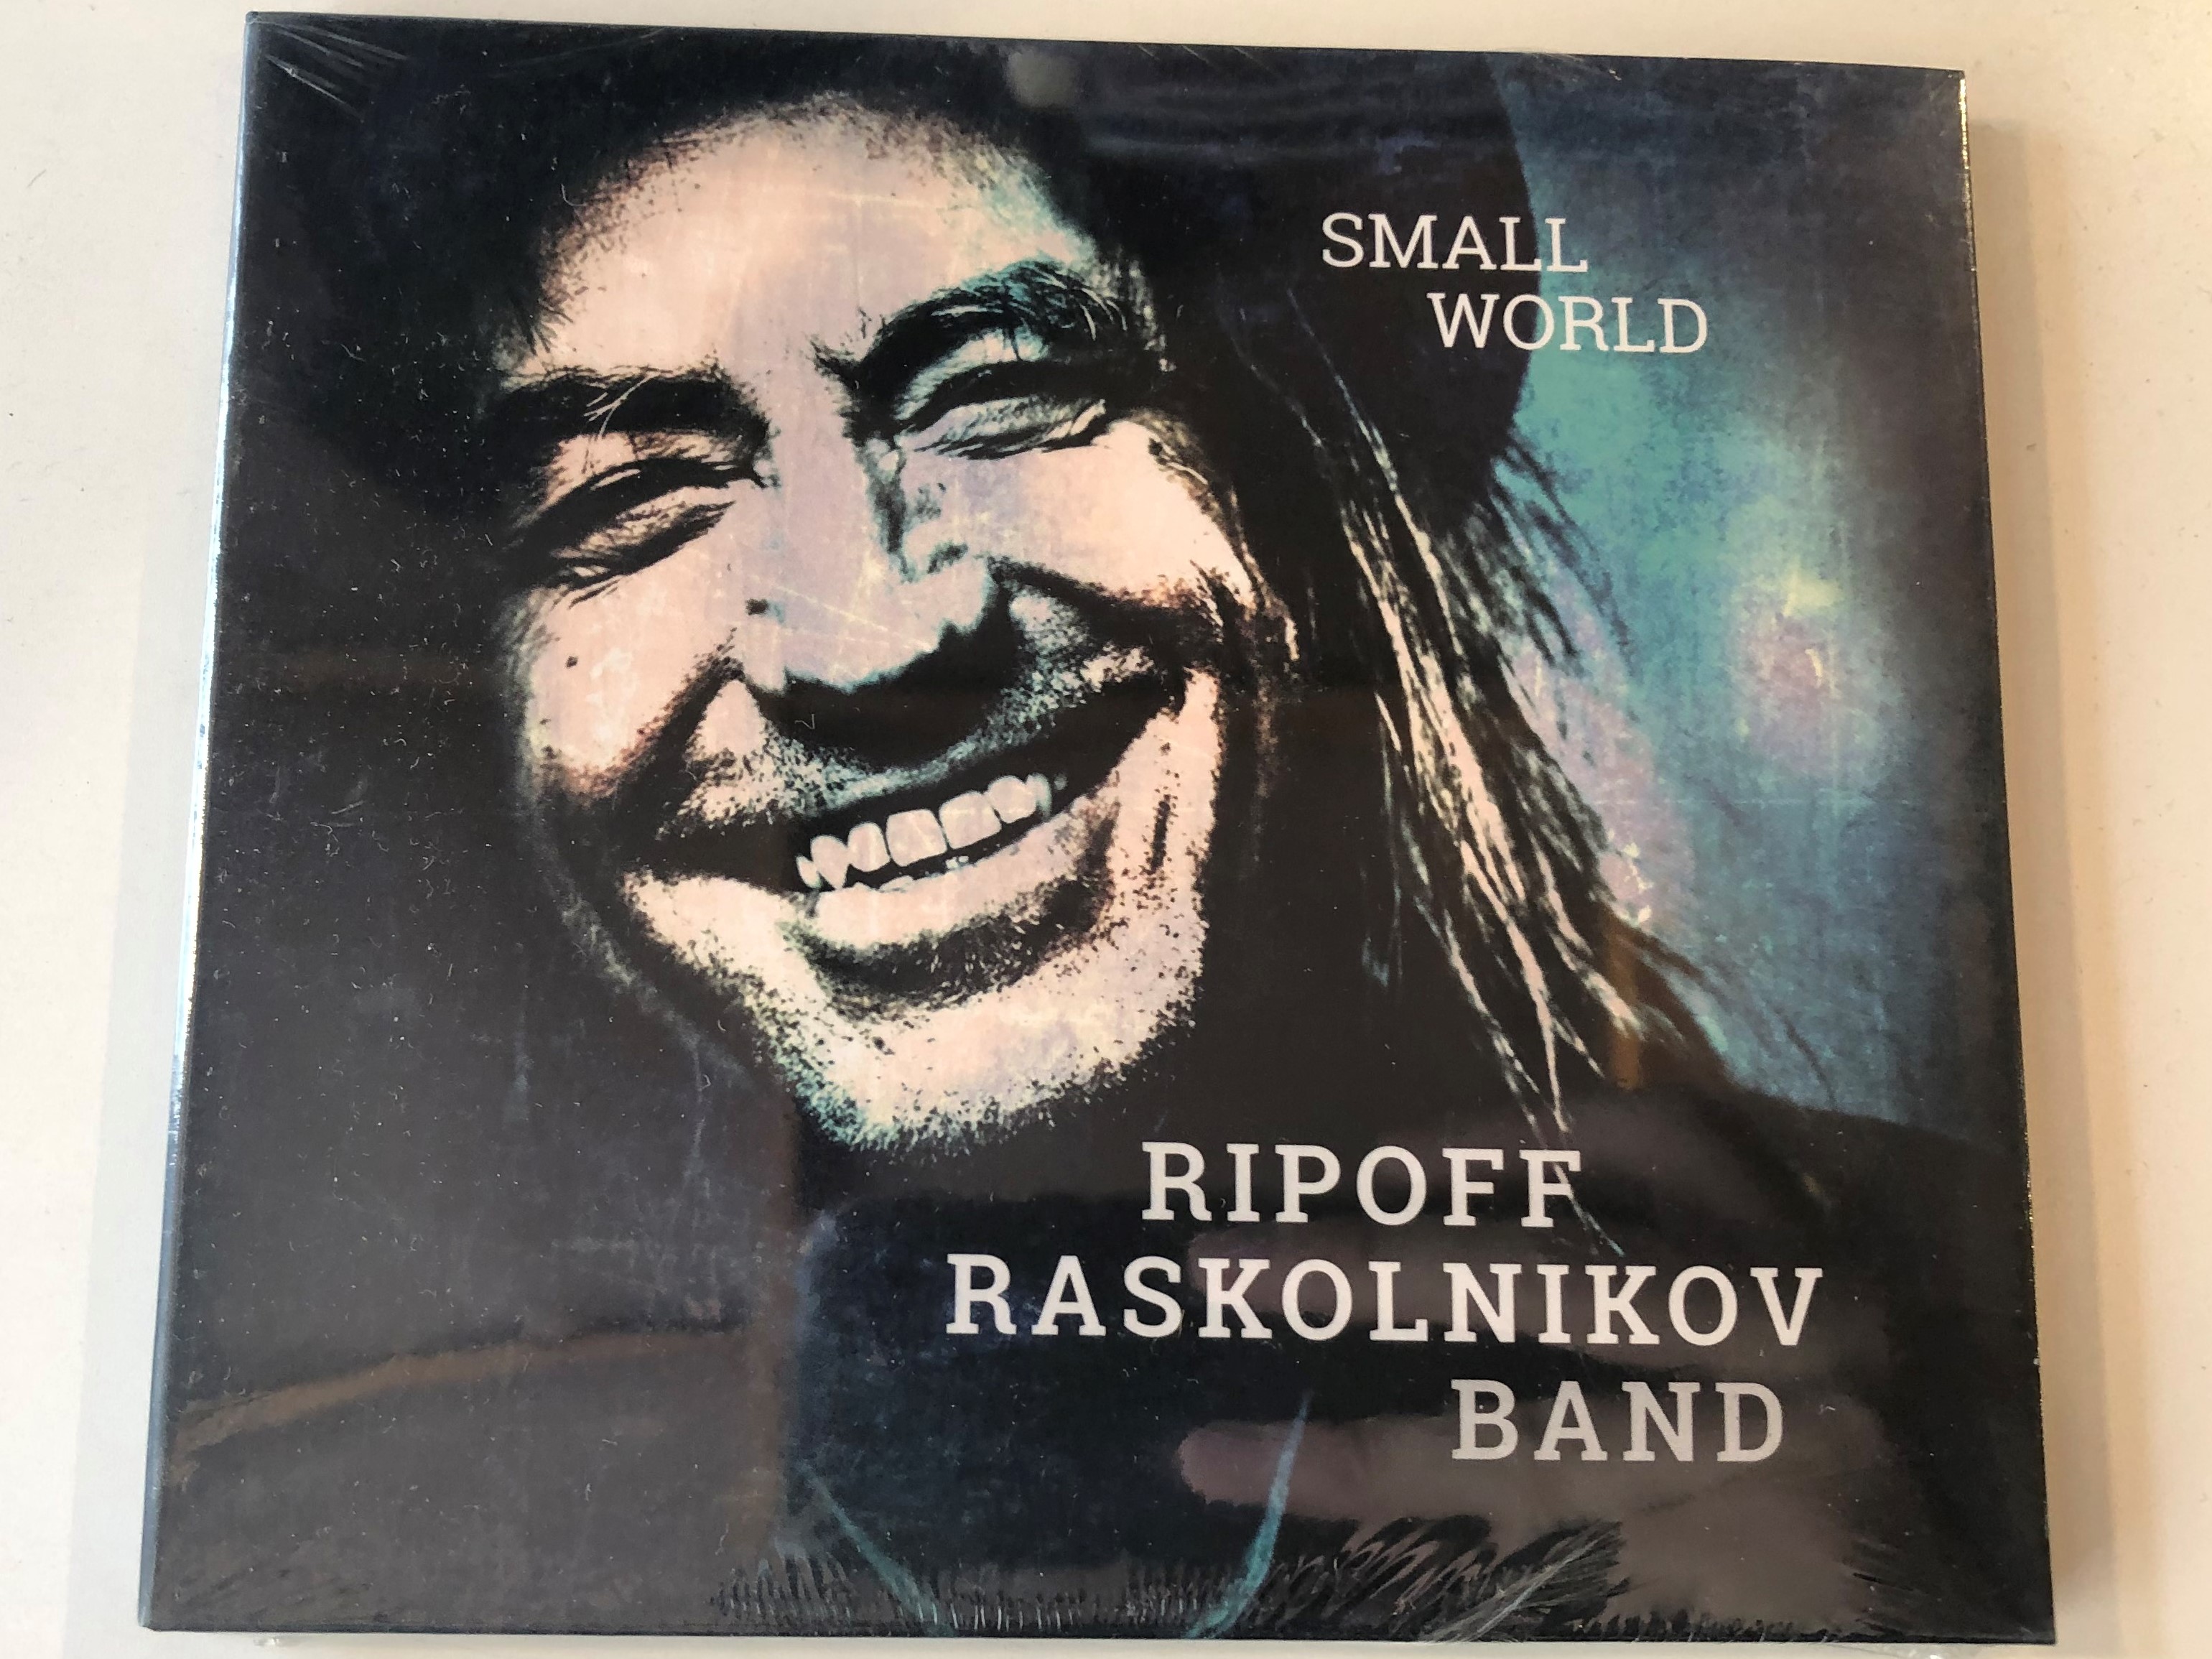 small-world-ripoff-raskolnikov-band-xlnt-records-audio-cd-2018-xlnt1610-1-.jpg